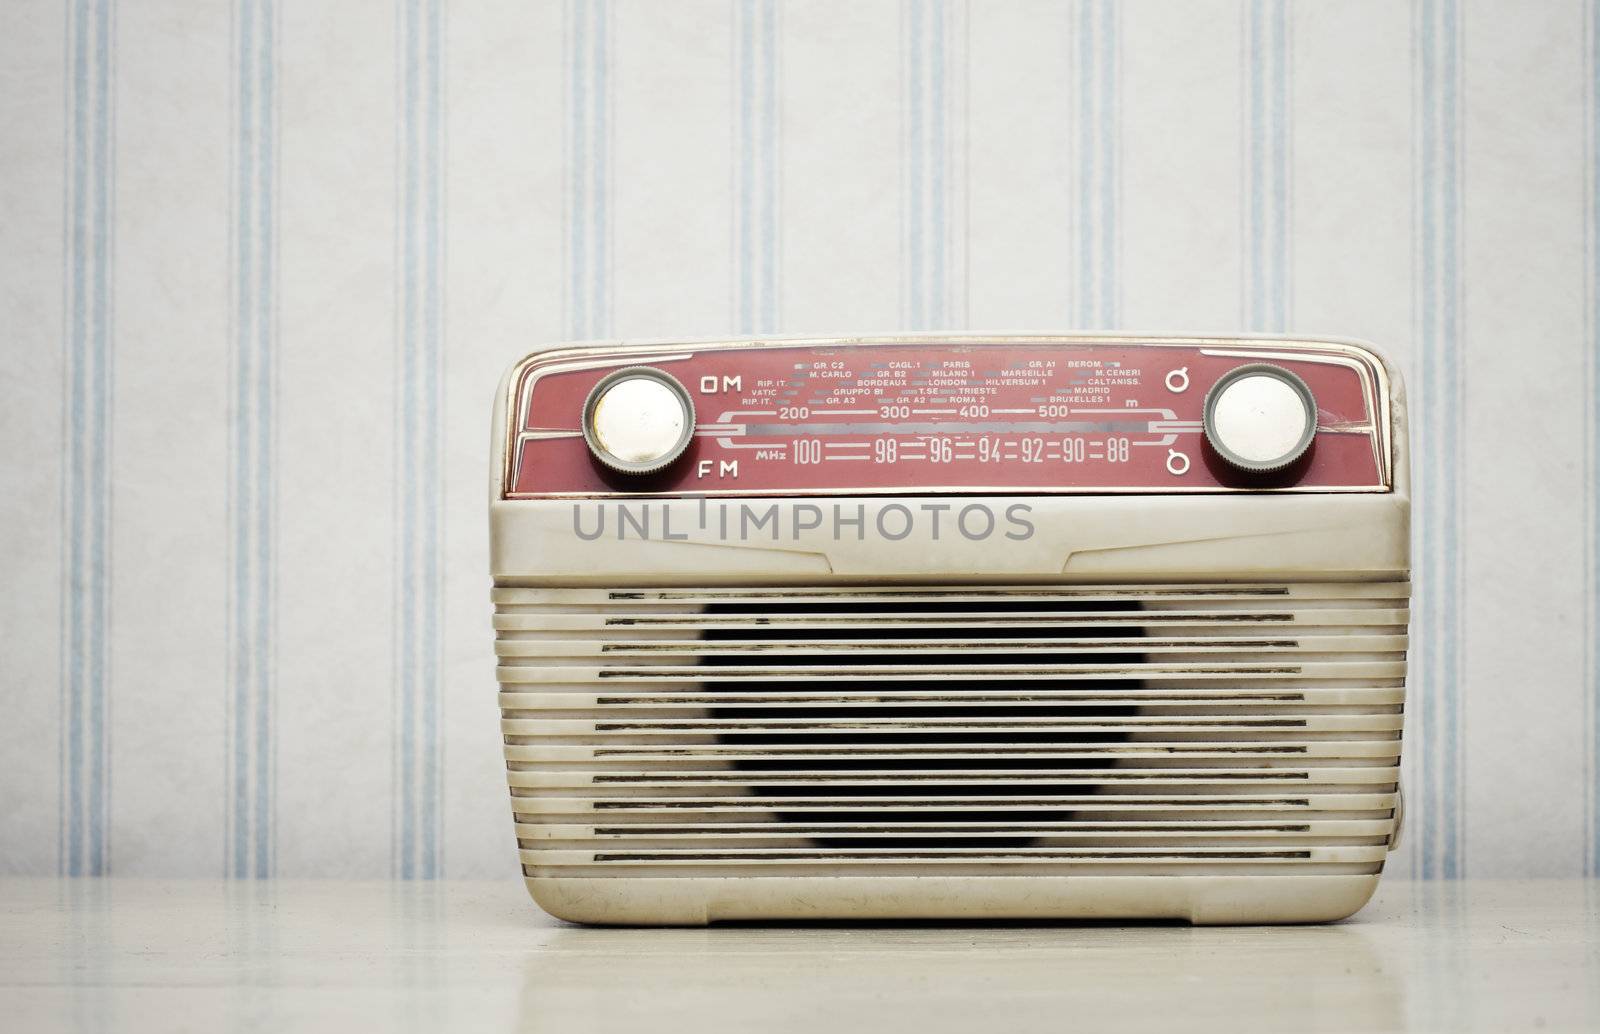 Antique radio on vintage wallpaper